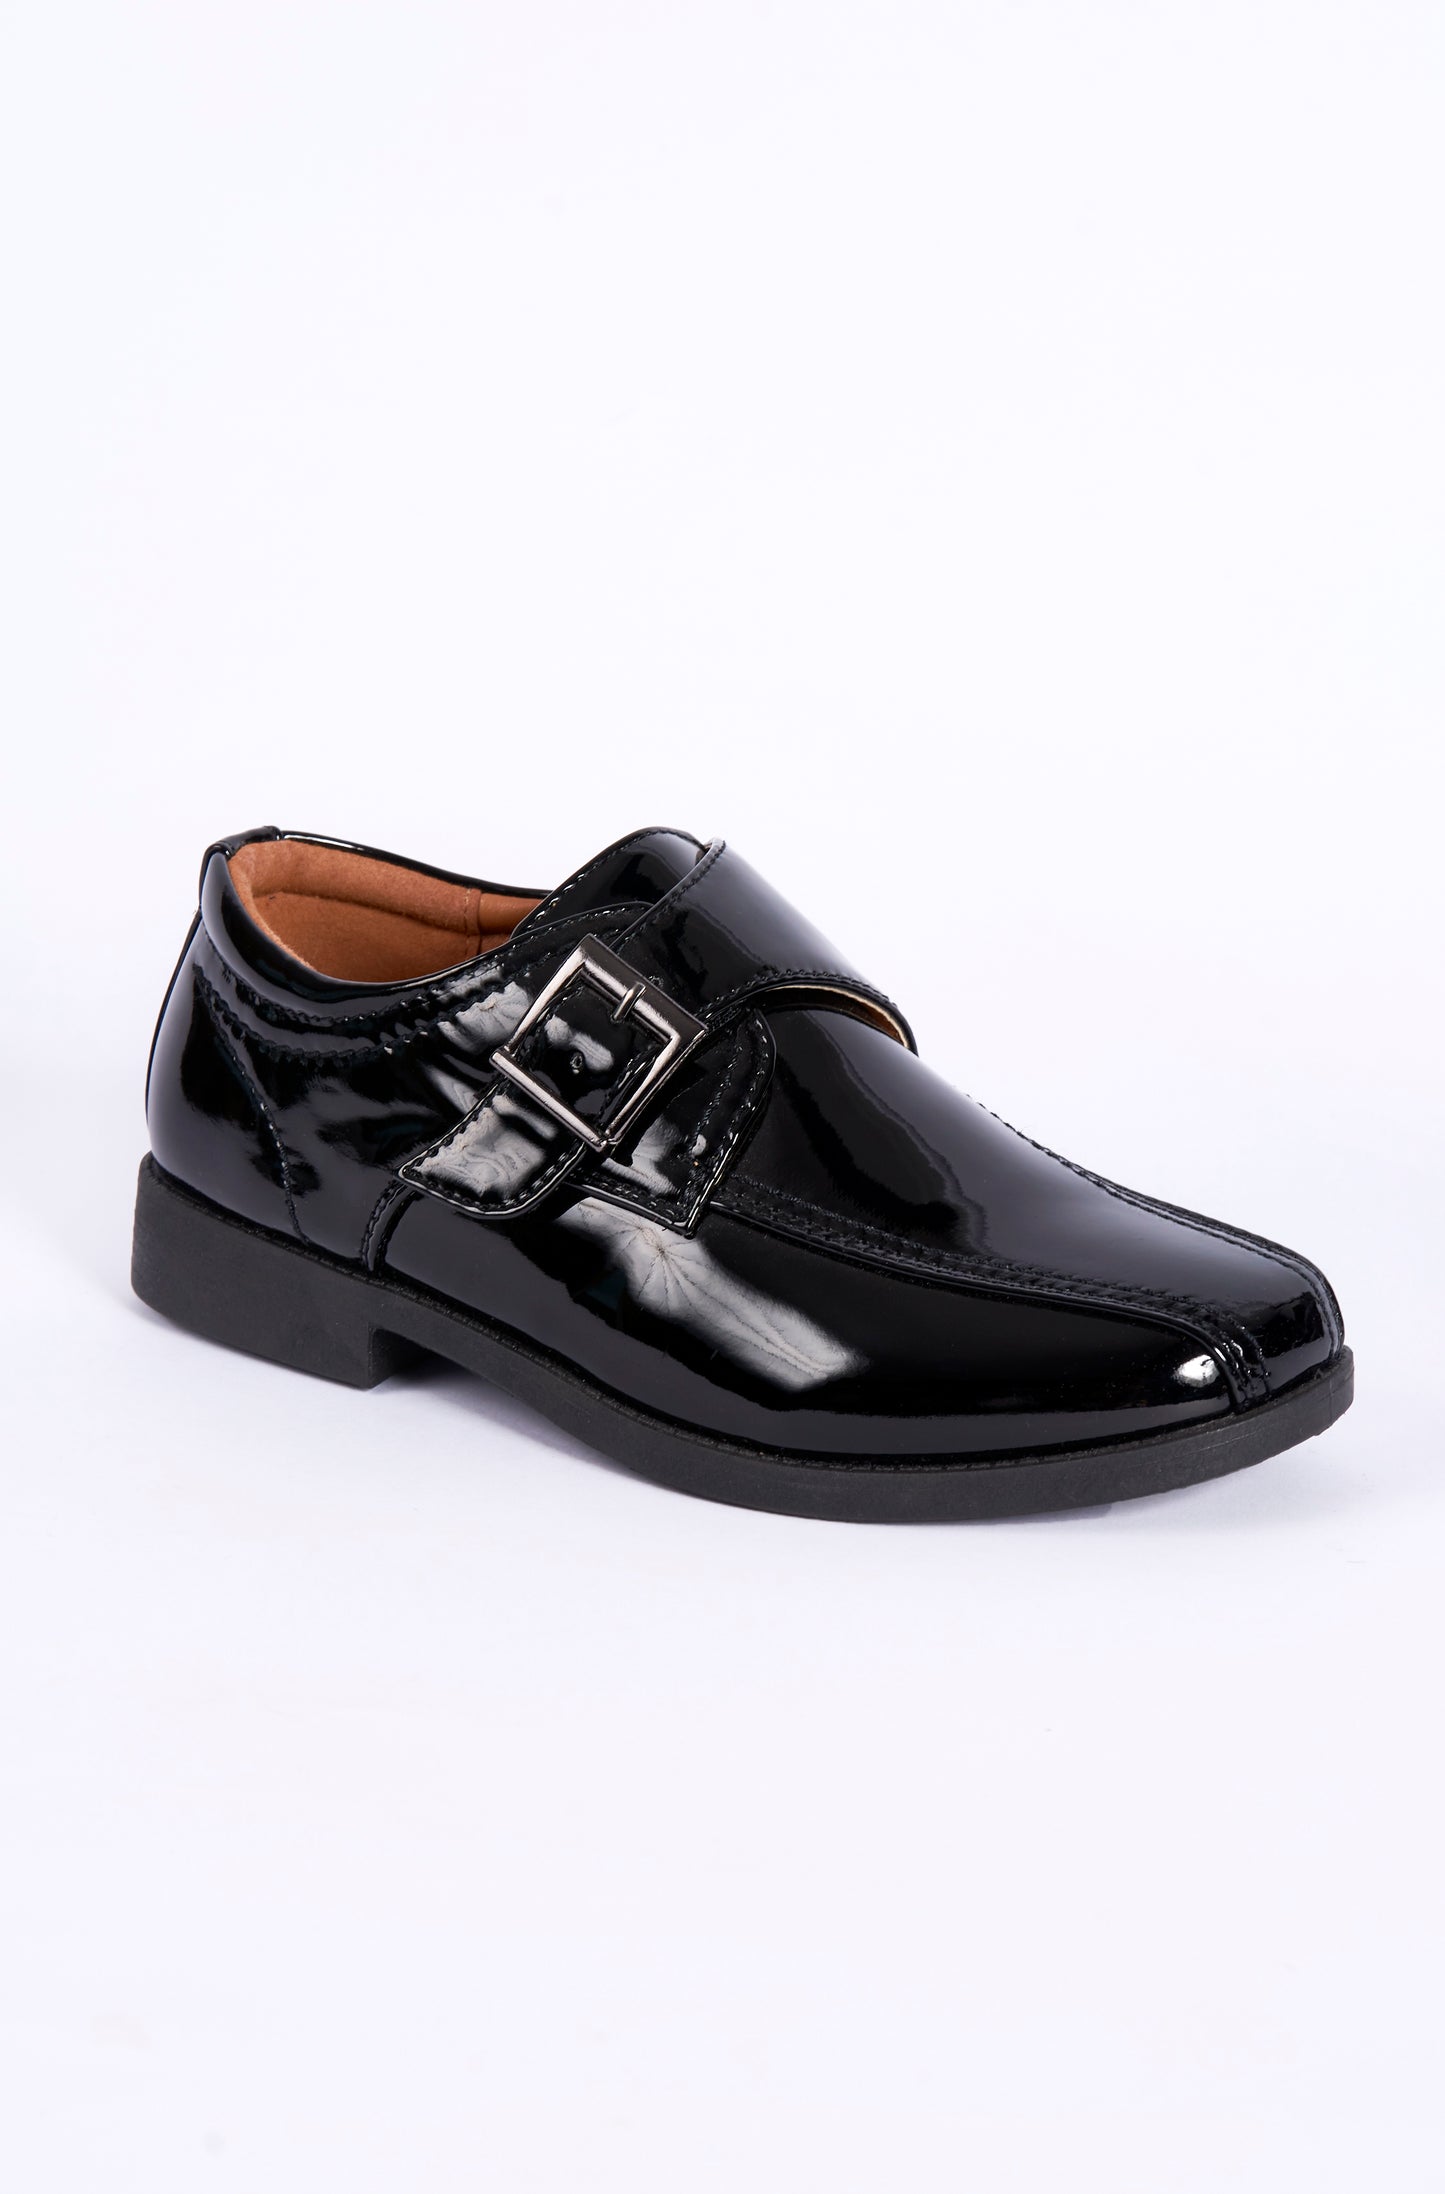 Charles Black Patent PU Side Buckle Formal / School Boys Shoe BXT 8X11